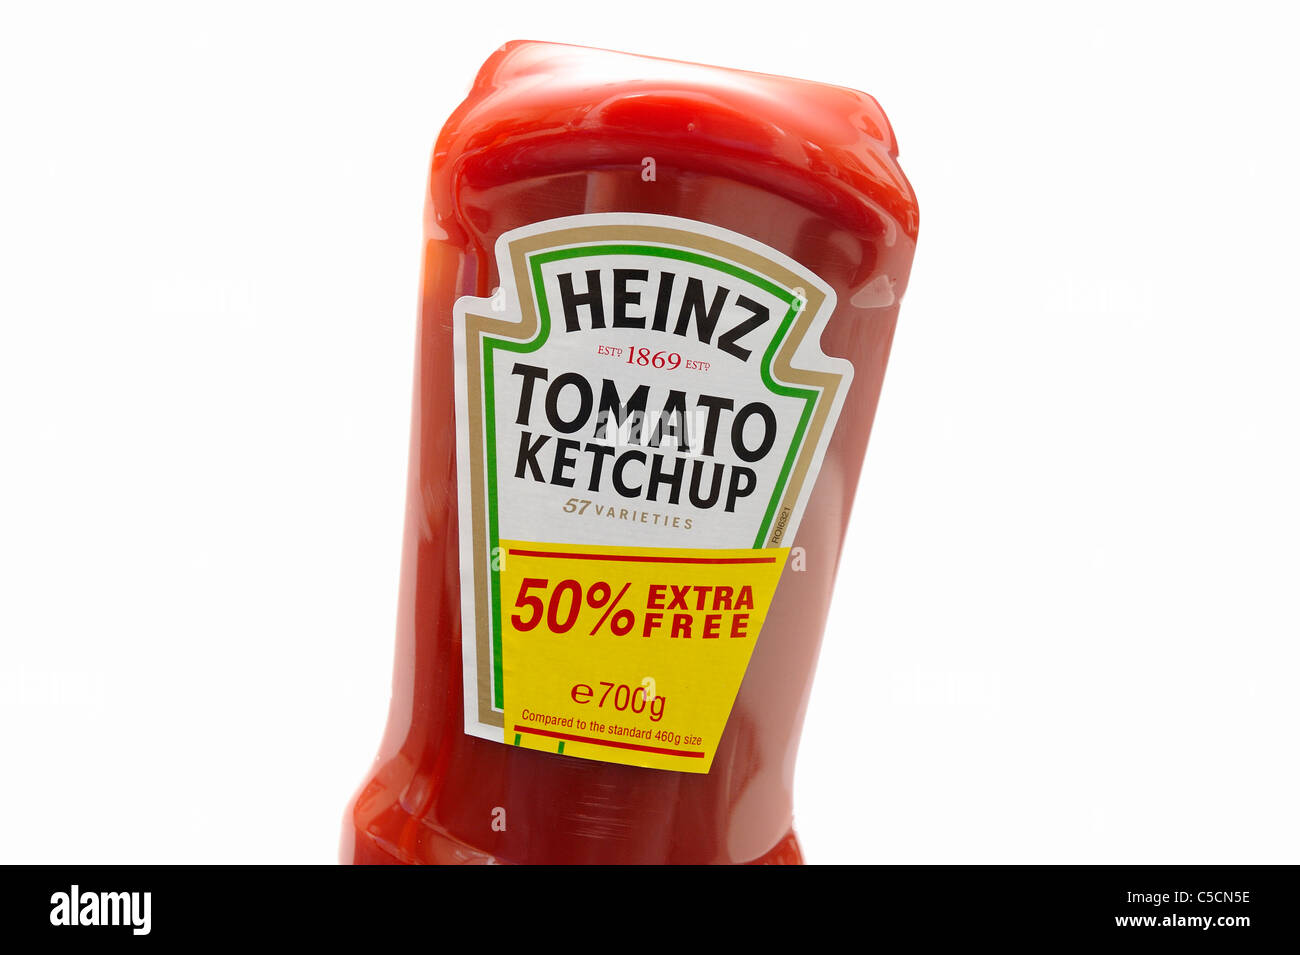 heinz tomato ketchup with 50% extra free england uk Stock Photo